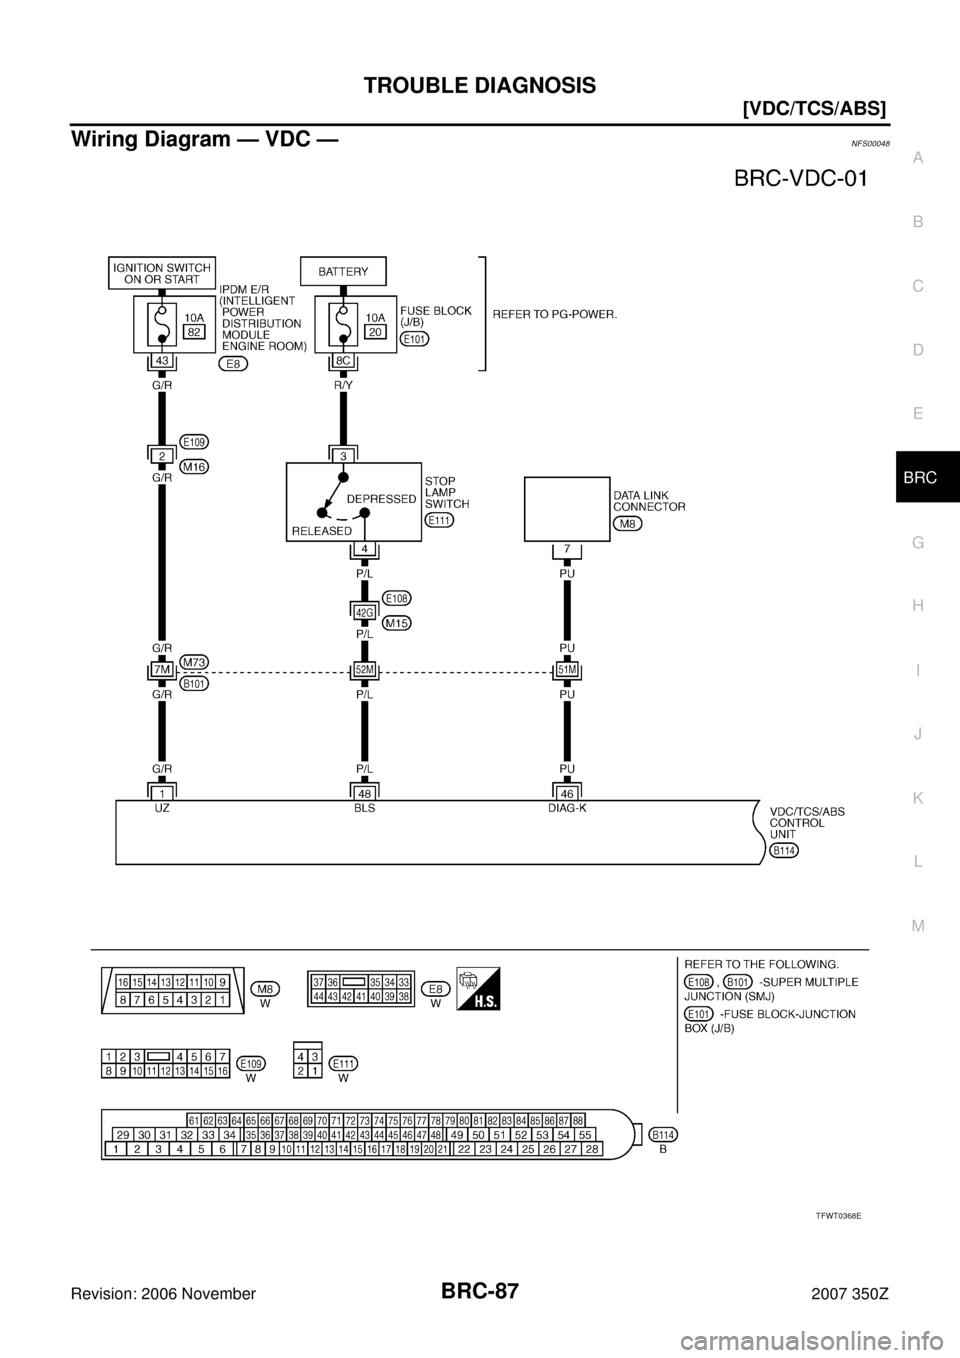 NISSAN 350Z 2007 Z33 Brake Control System Manual Online TROUBLE DIAGNOSIS
BRC-87
[VDC/TCS/ABS]
C
D
E
G
H
I
J
K
L
MA
B
BRC
Revision: 2006 November2007 350Z
Wiring Diagram — VDC —NFS00048
TFWT0368E 